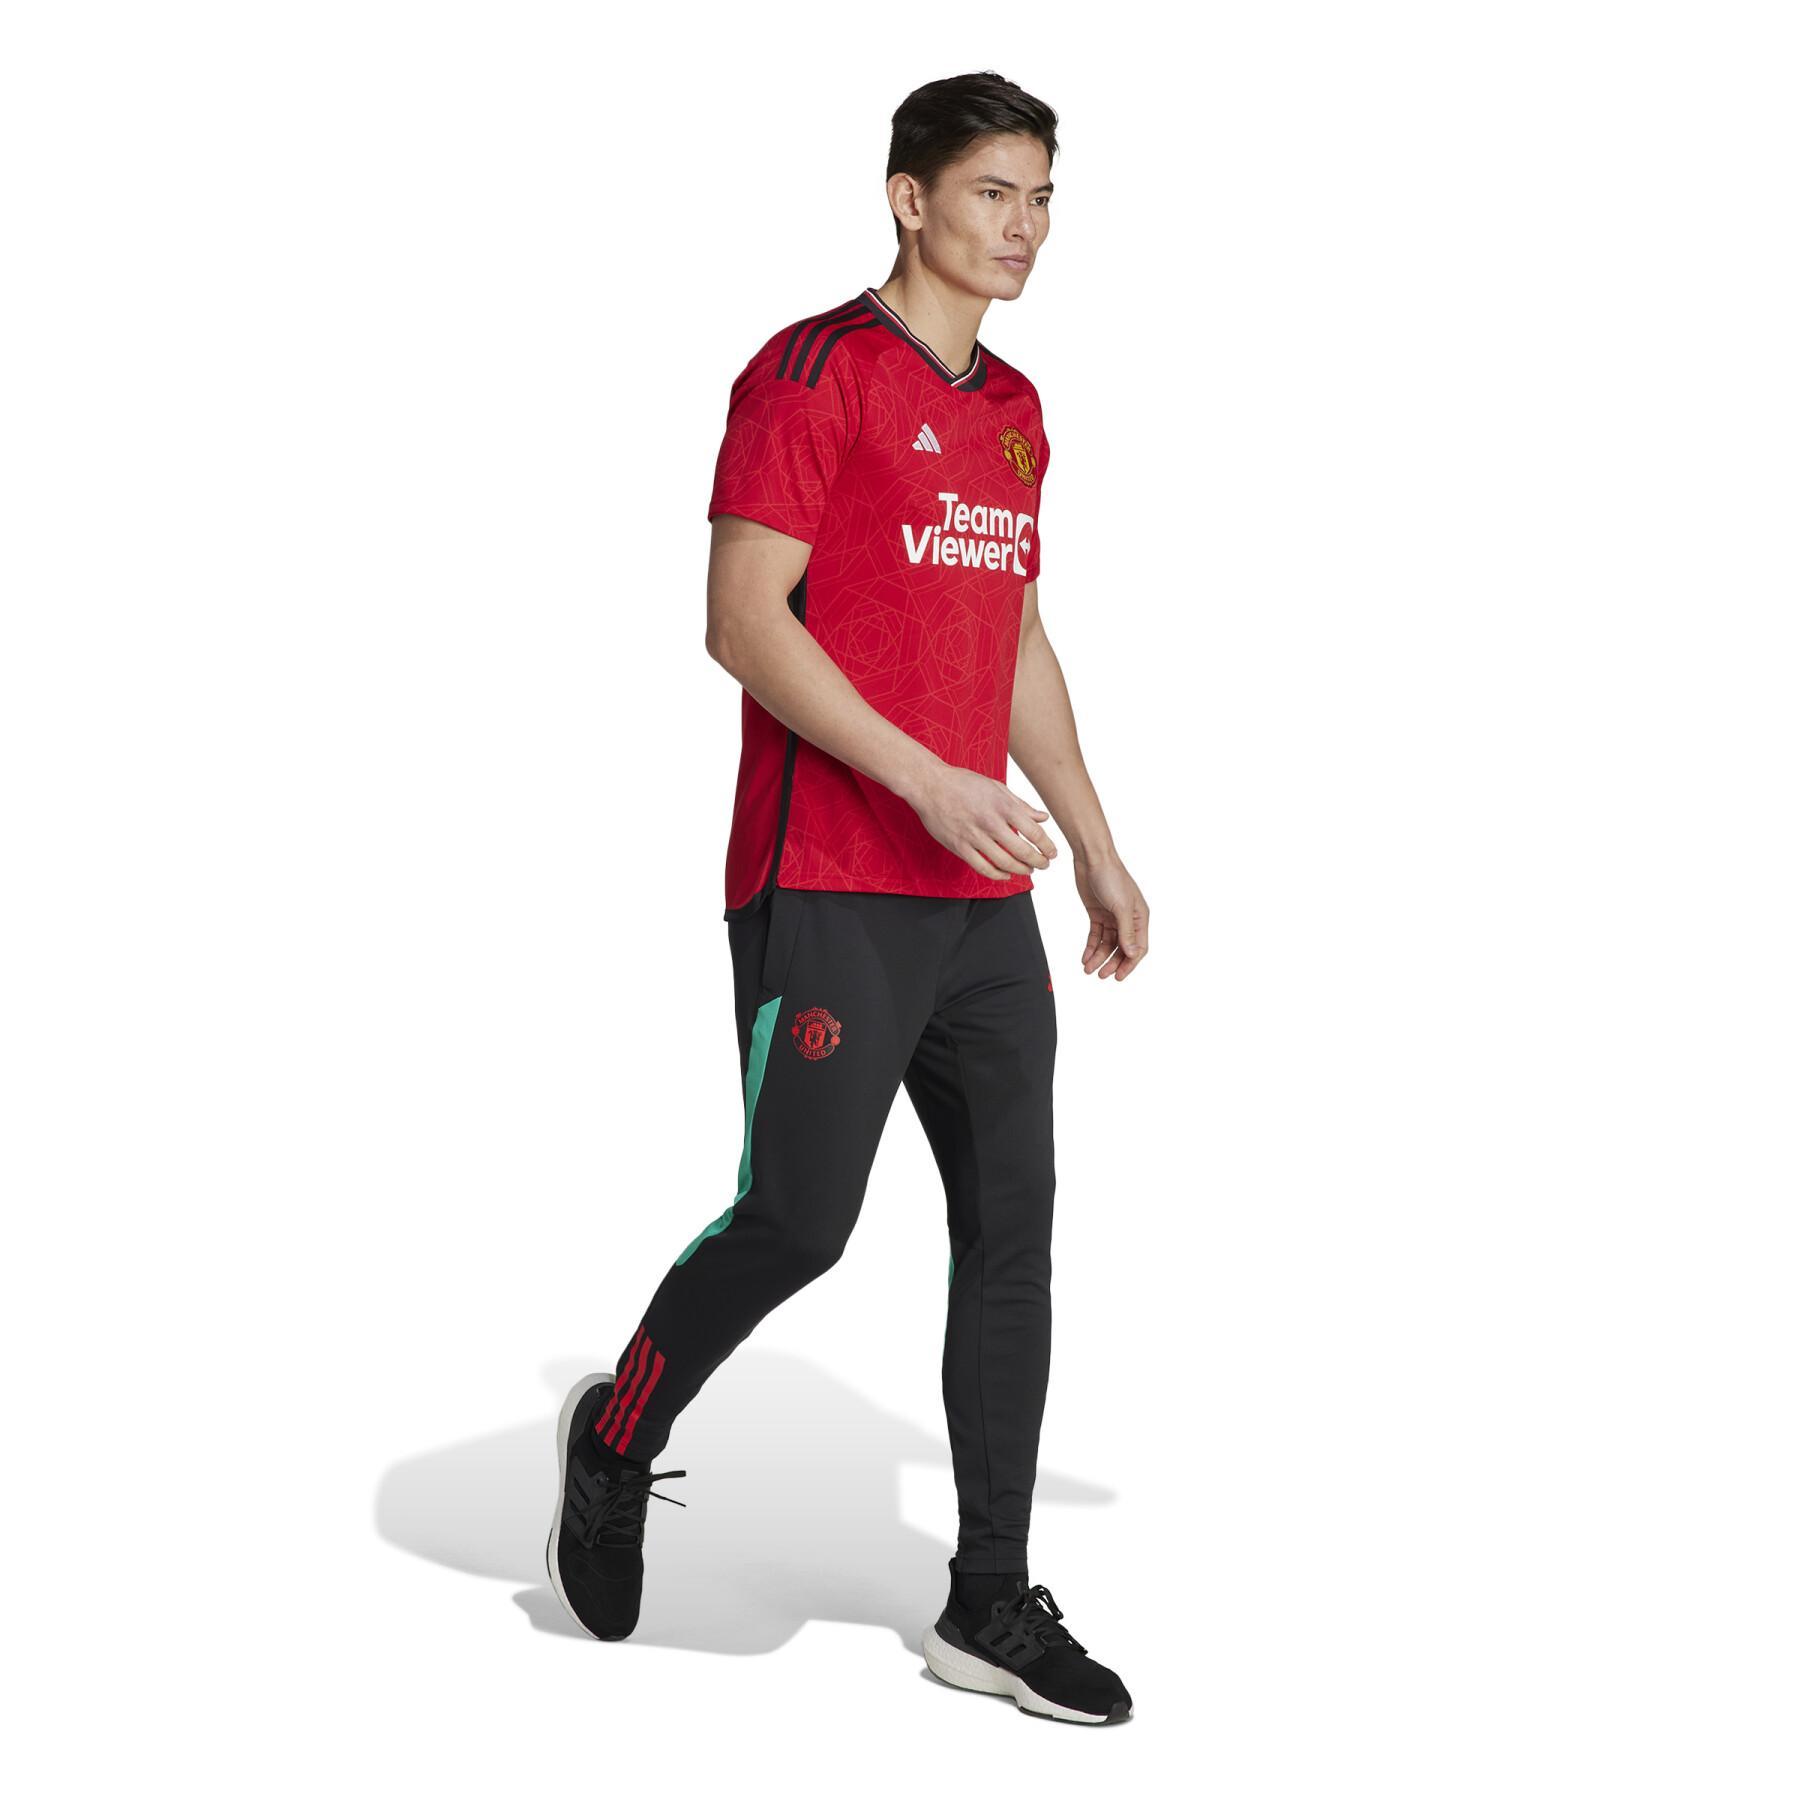 Camiseta primera equipación Manchester United 23/24